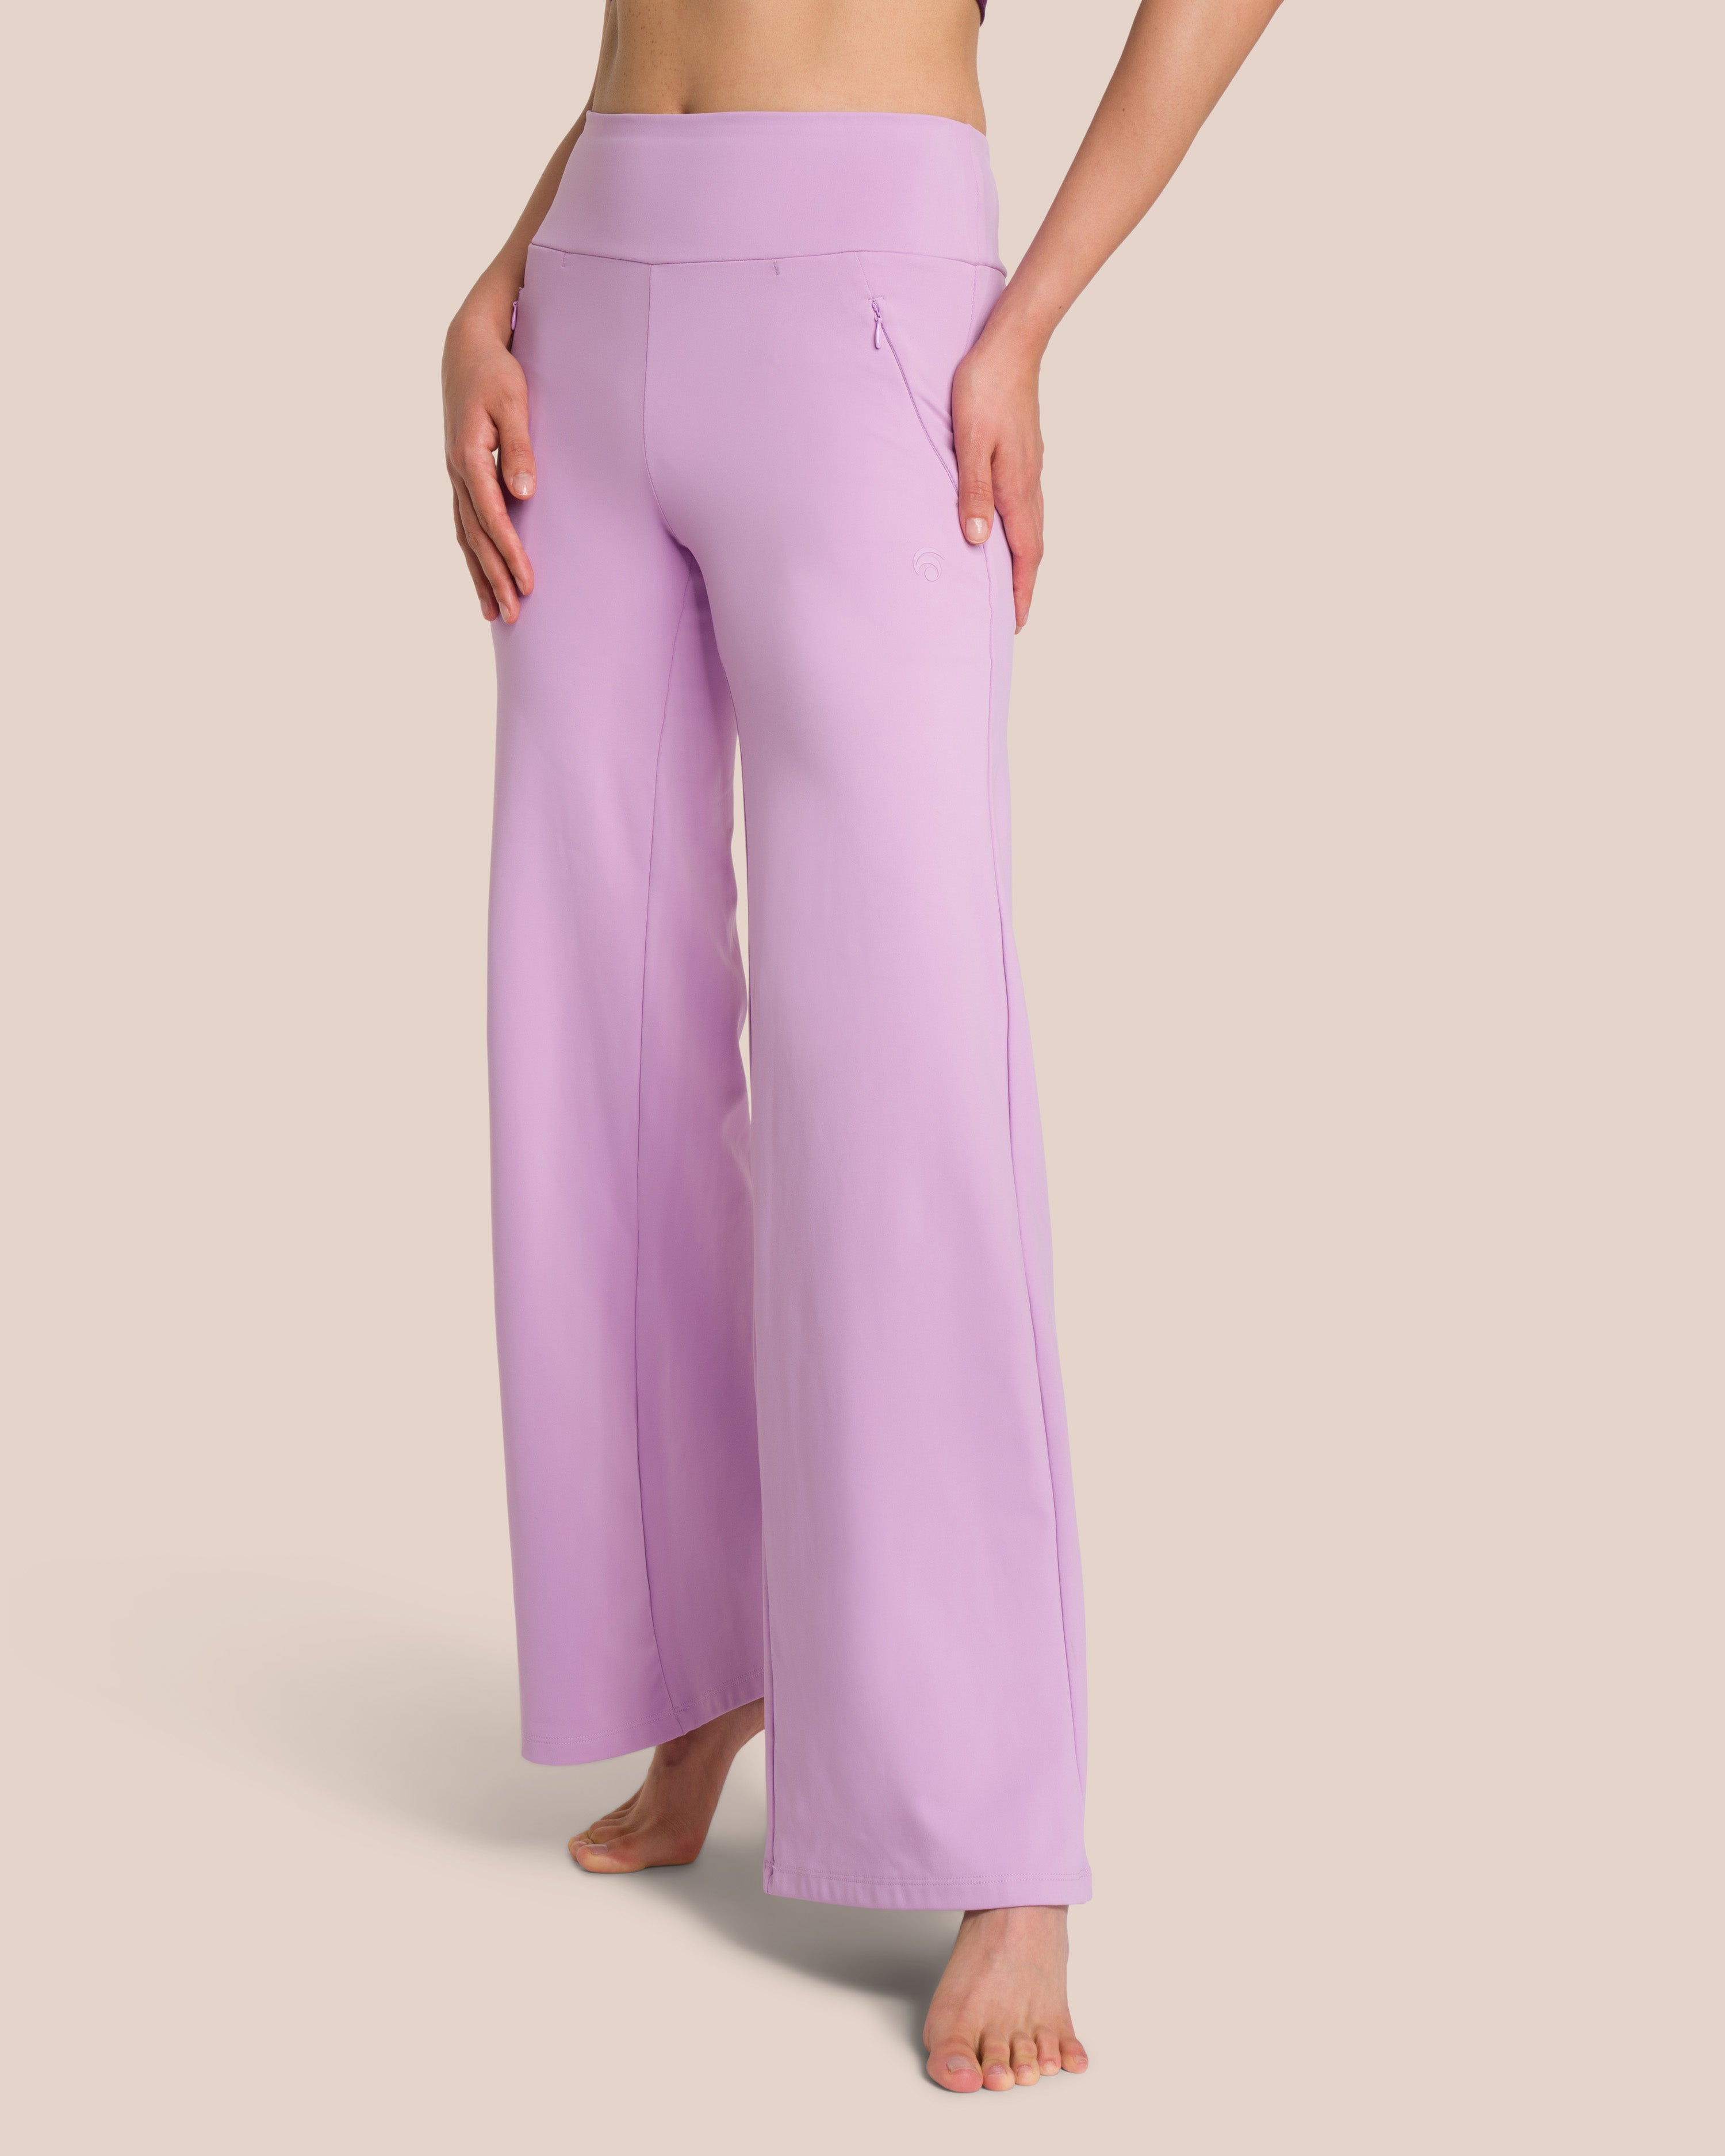 Florence Layer Straight Leg Set - Misty Lavender